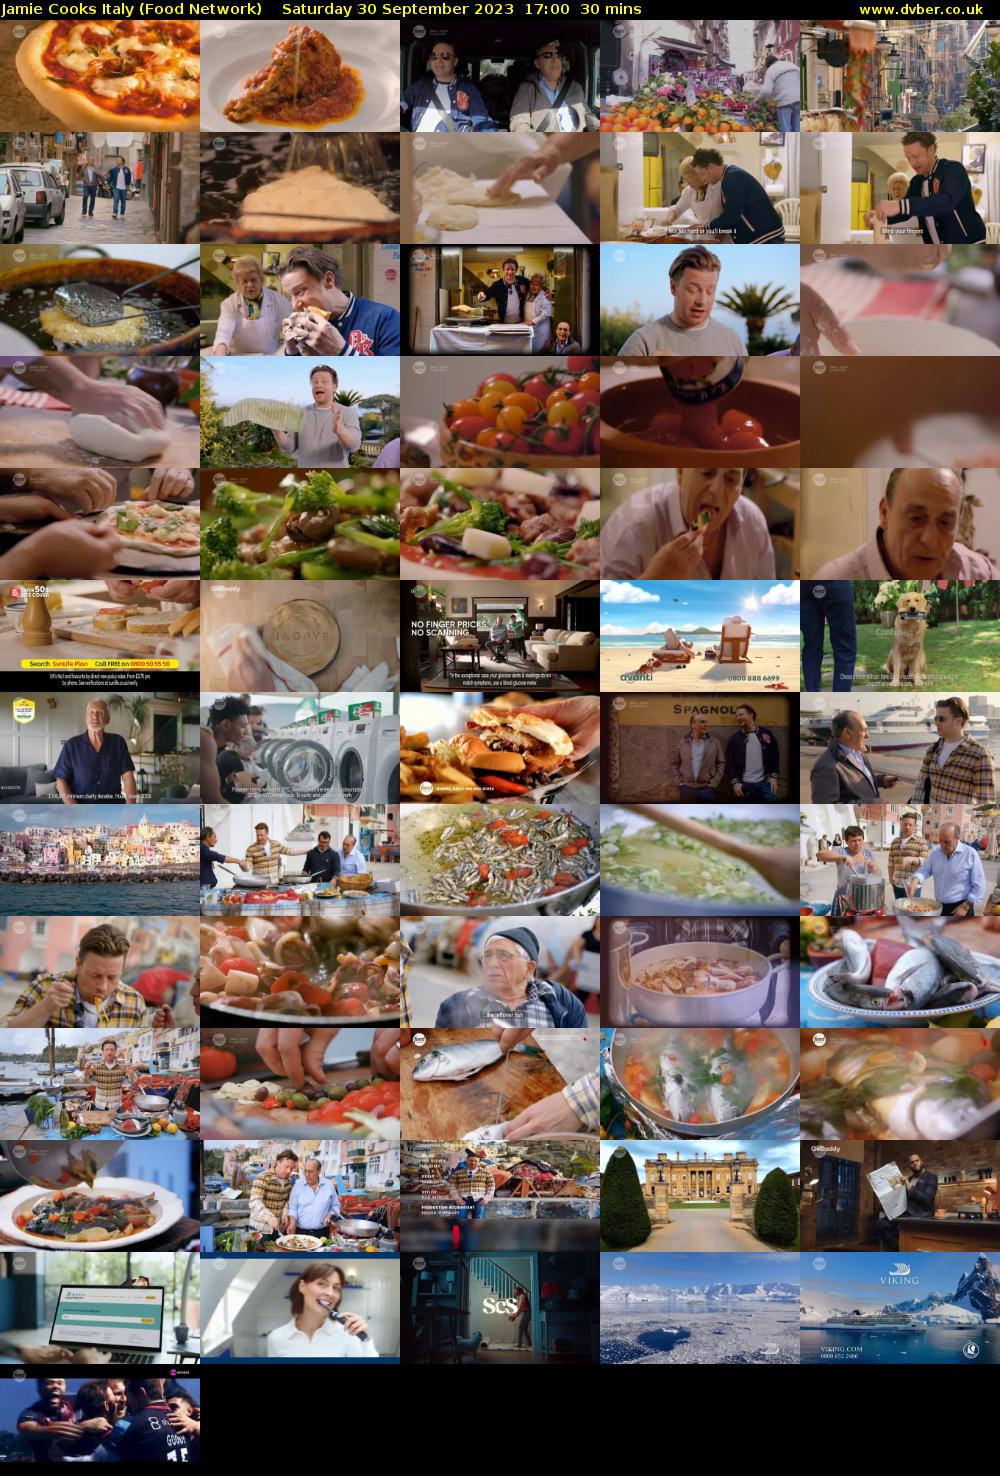 Jamie Cooks Italy (Food Network) Saturday 30 September 2023 17:00 - 17:30